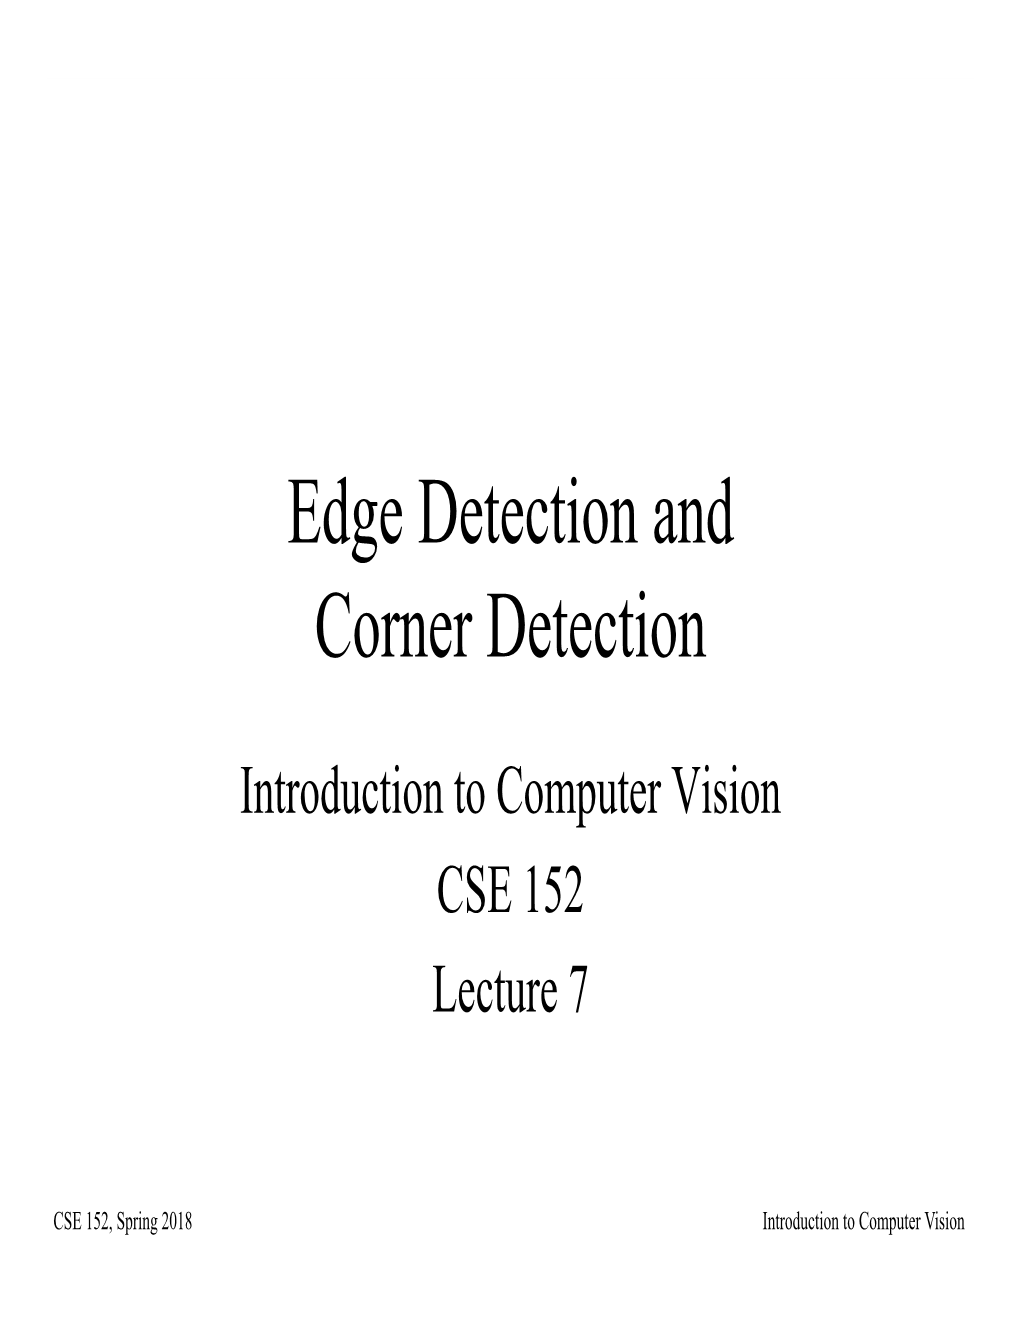 Edge Detection and Corner Detection